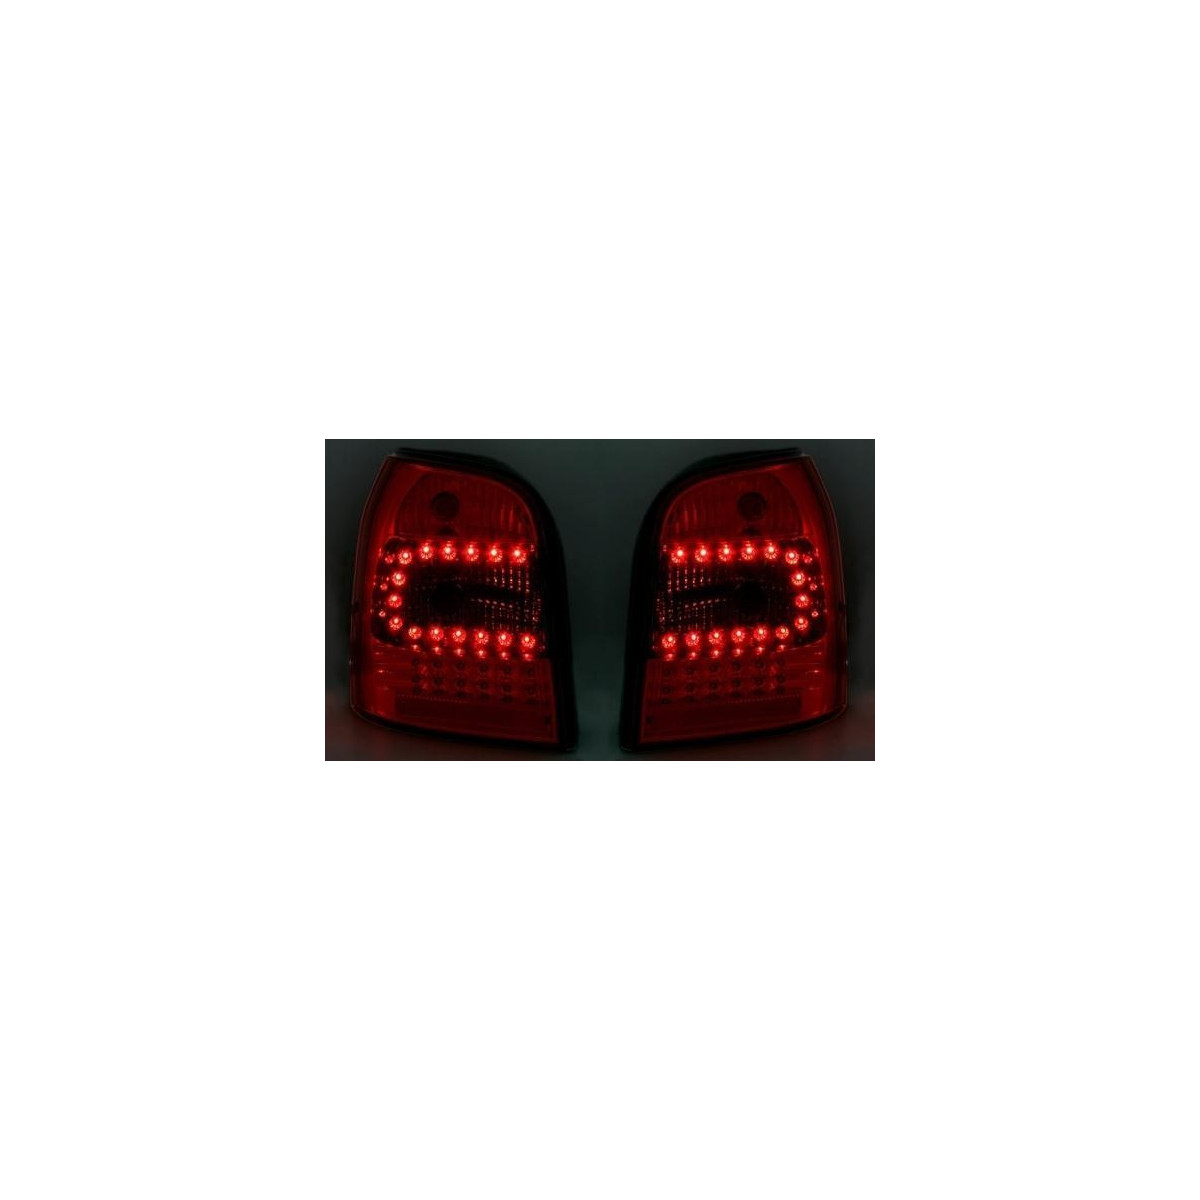 LAMPY TYLNE DIDOWE RED SMOKE AUDI A4 B5 AVANT 1/96-06/01